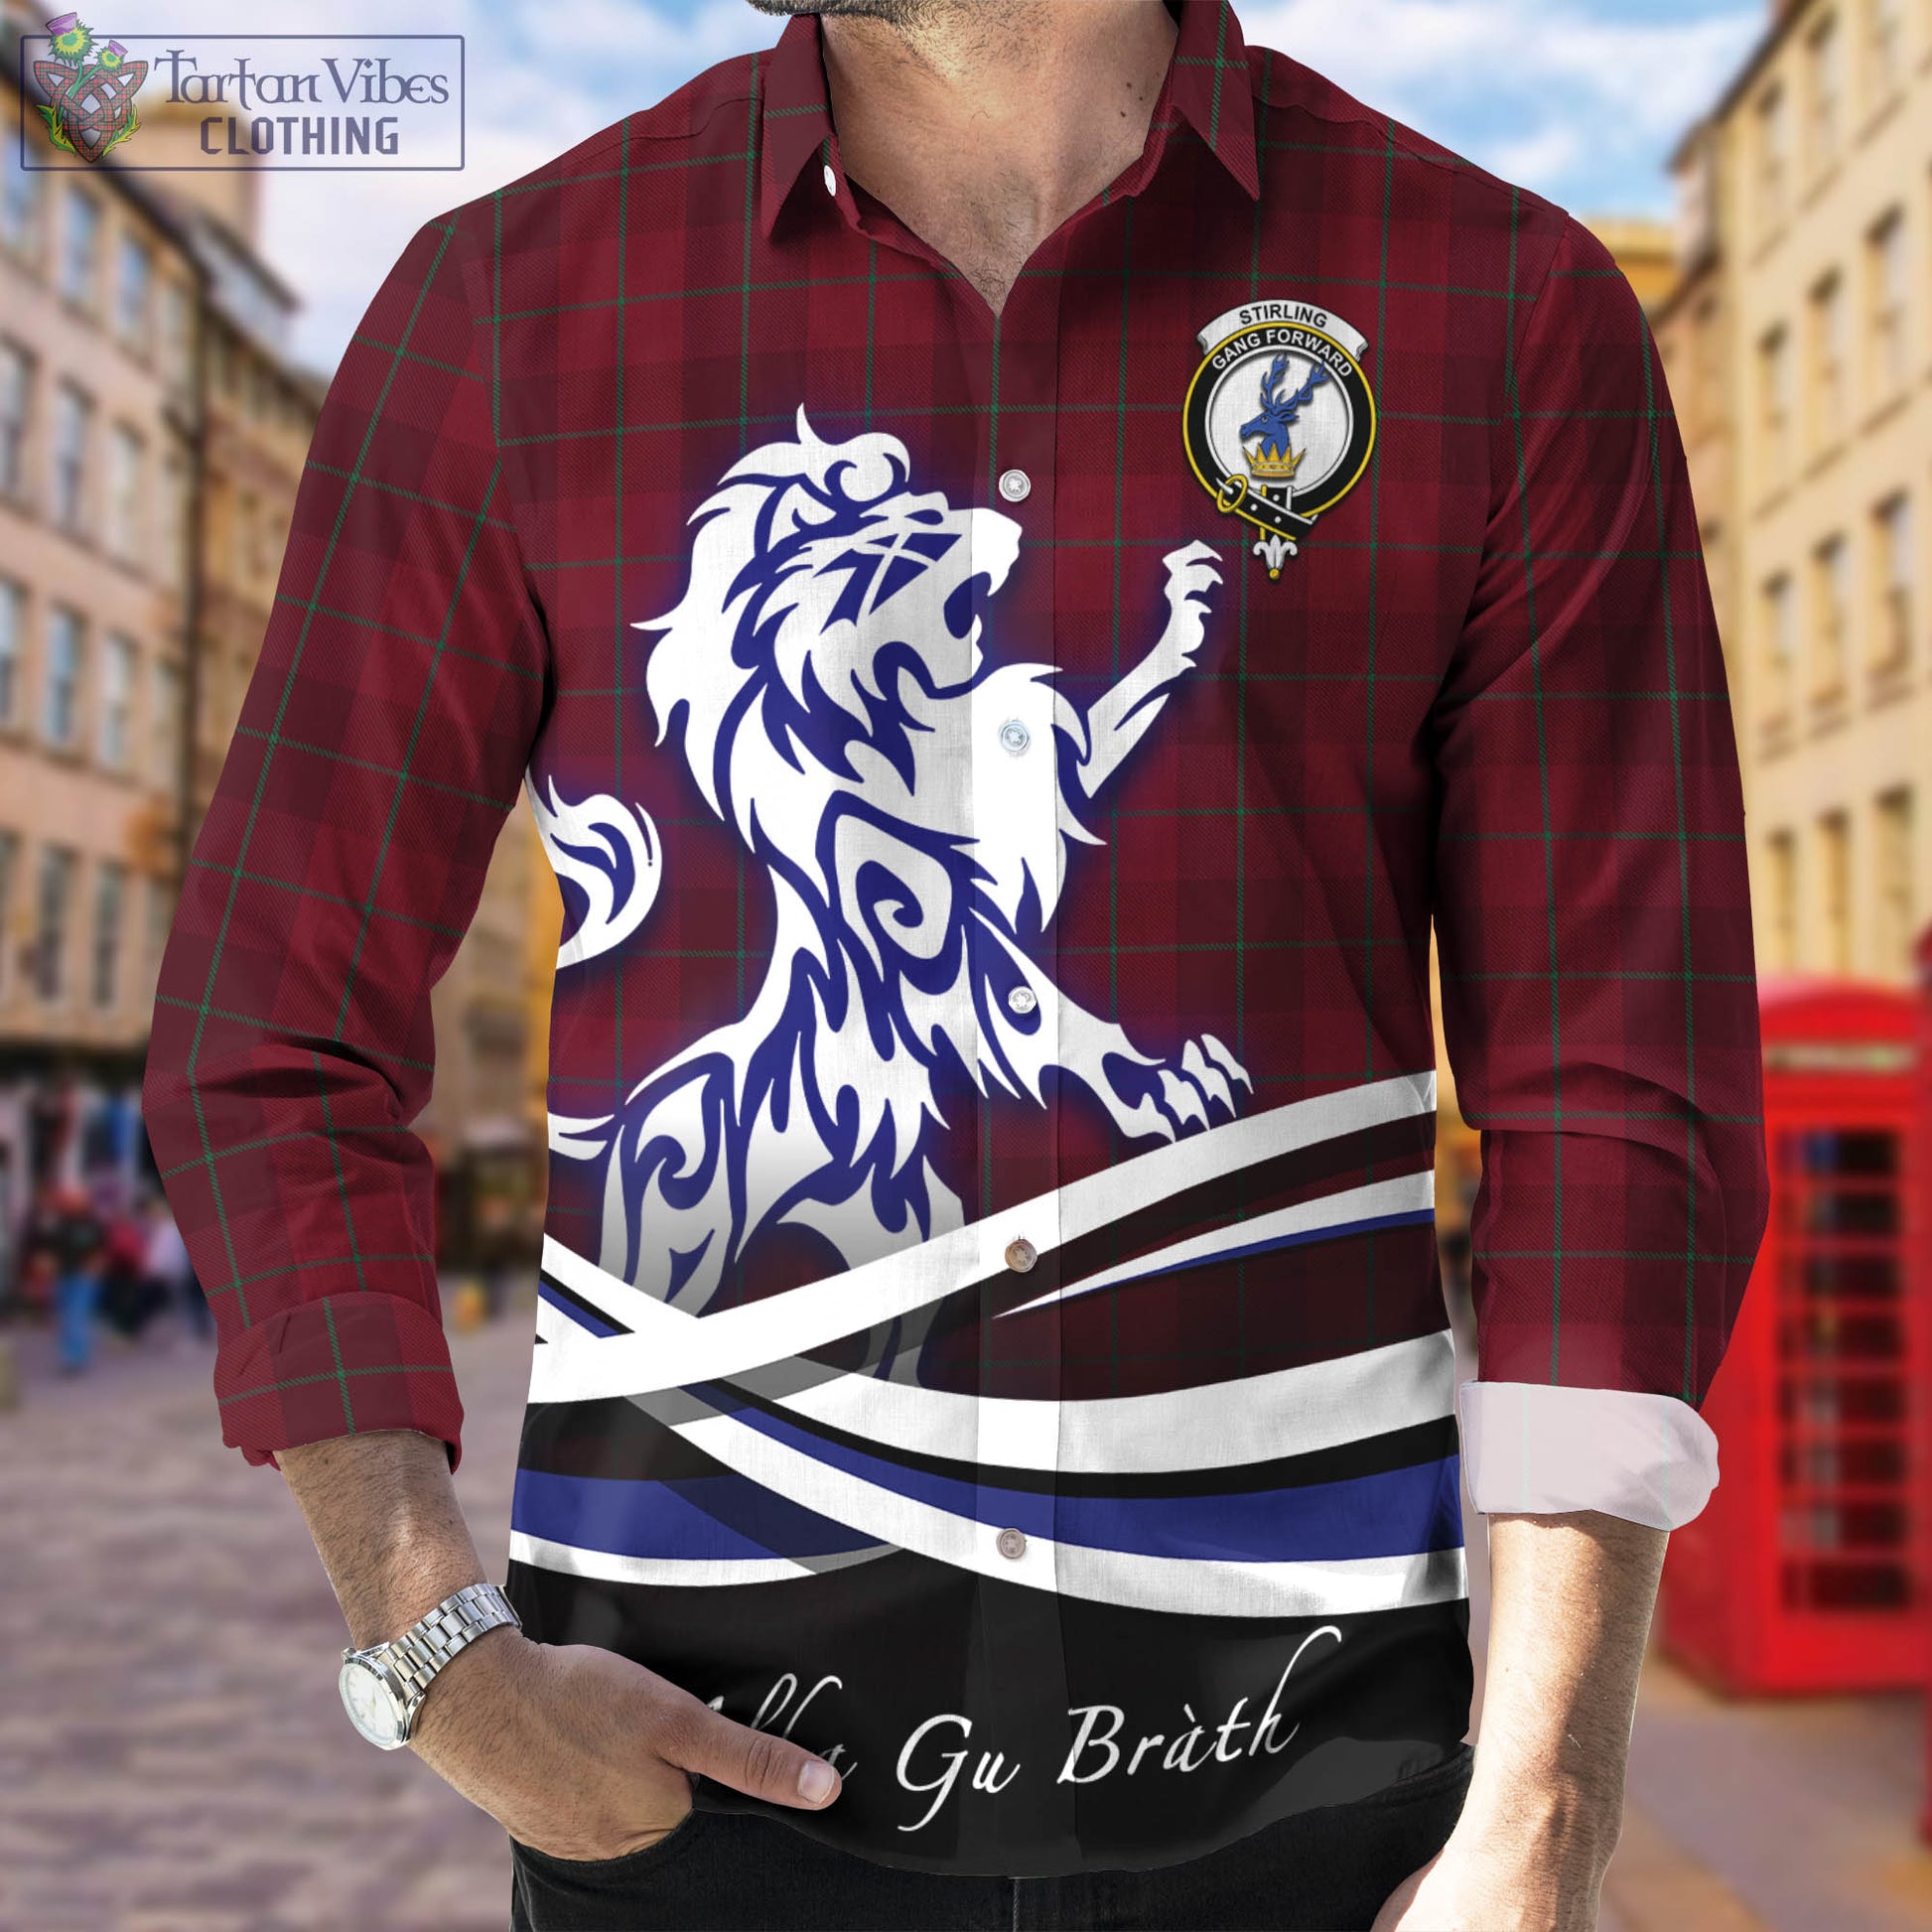 stirling-of-keir-tartan-long-sleeve-button-up-shirt-with-alba-gu-brath-regal-lion-emblem